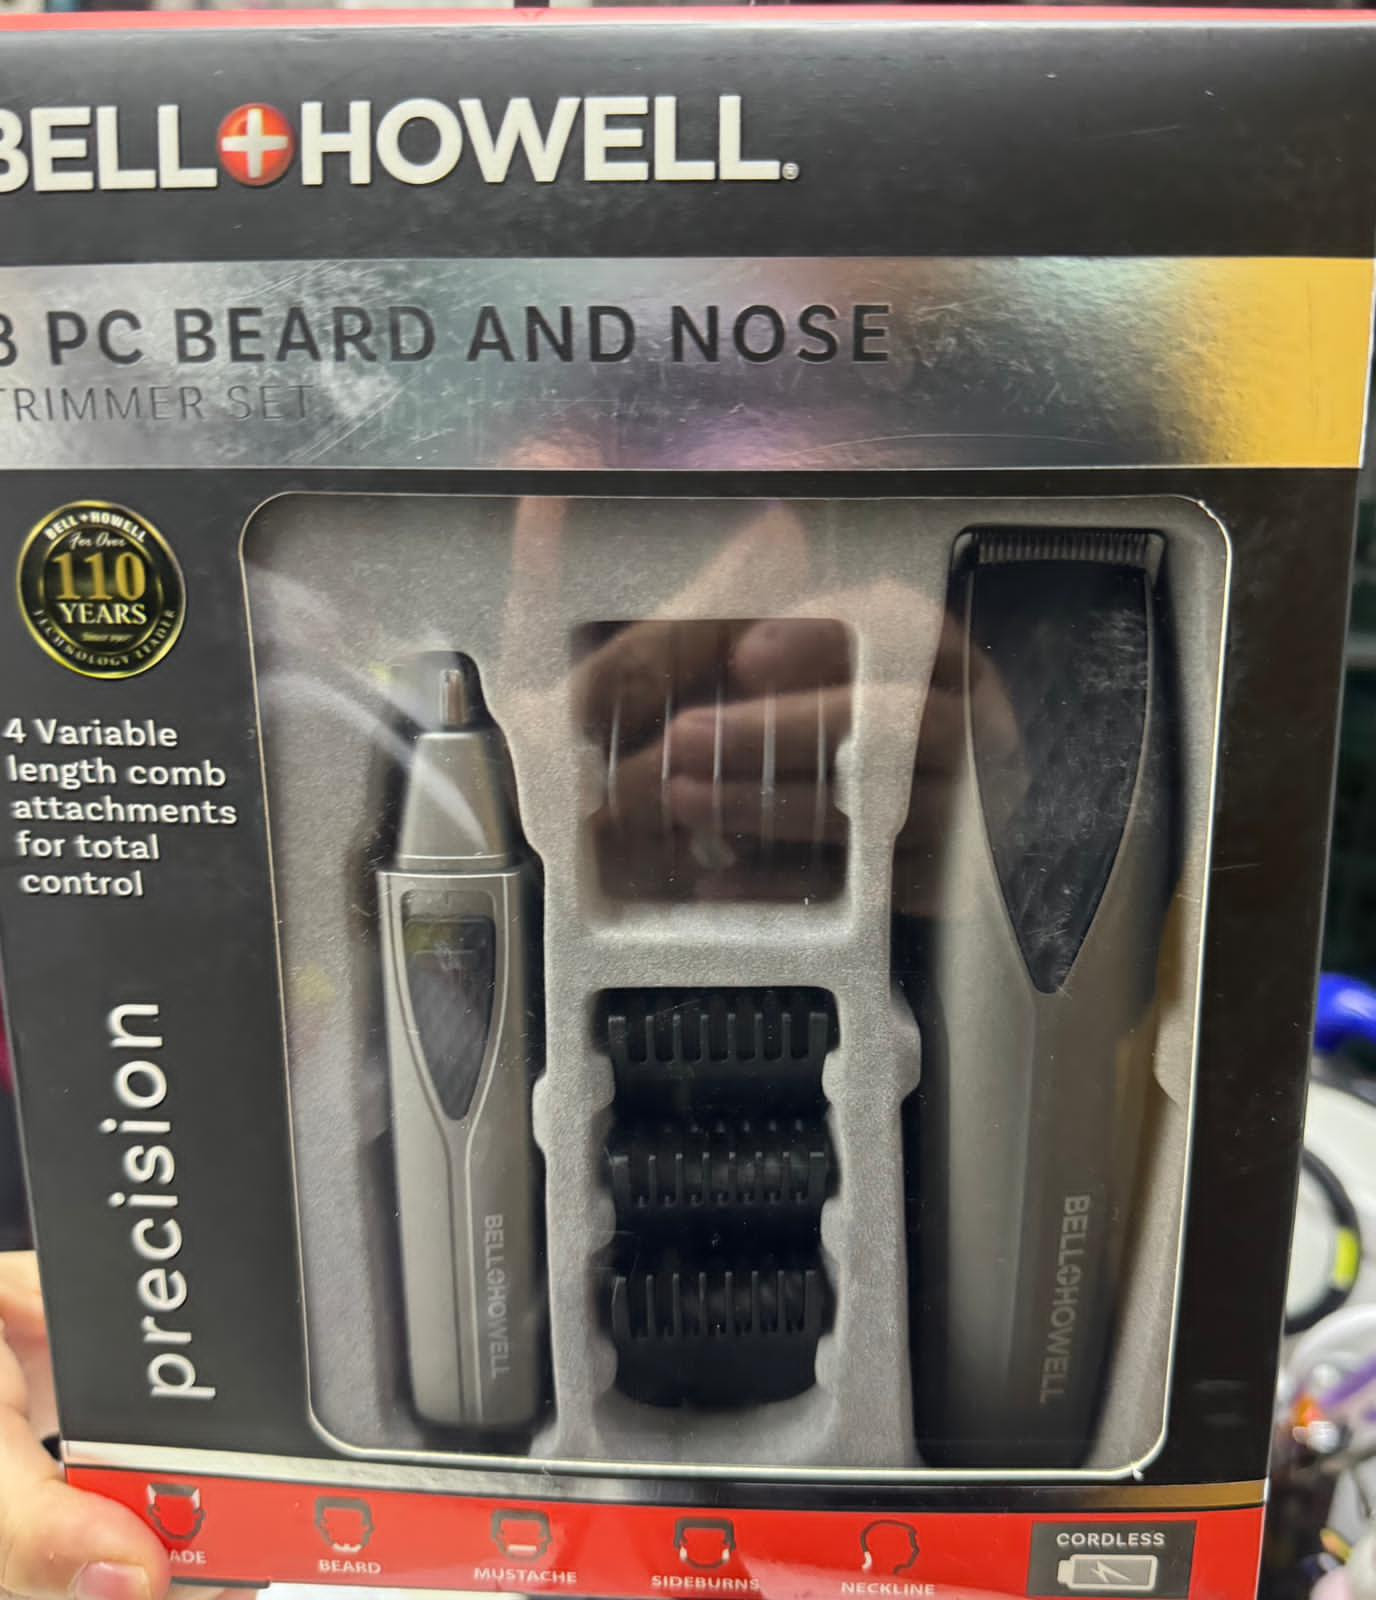 Bell + Howell Cordless 8 Piece Nose & Hair Trimmer Set.